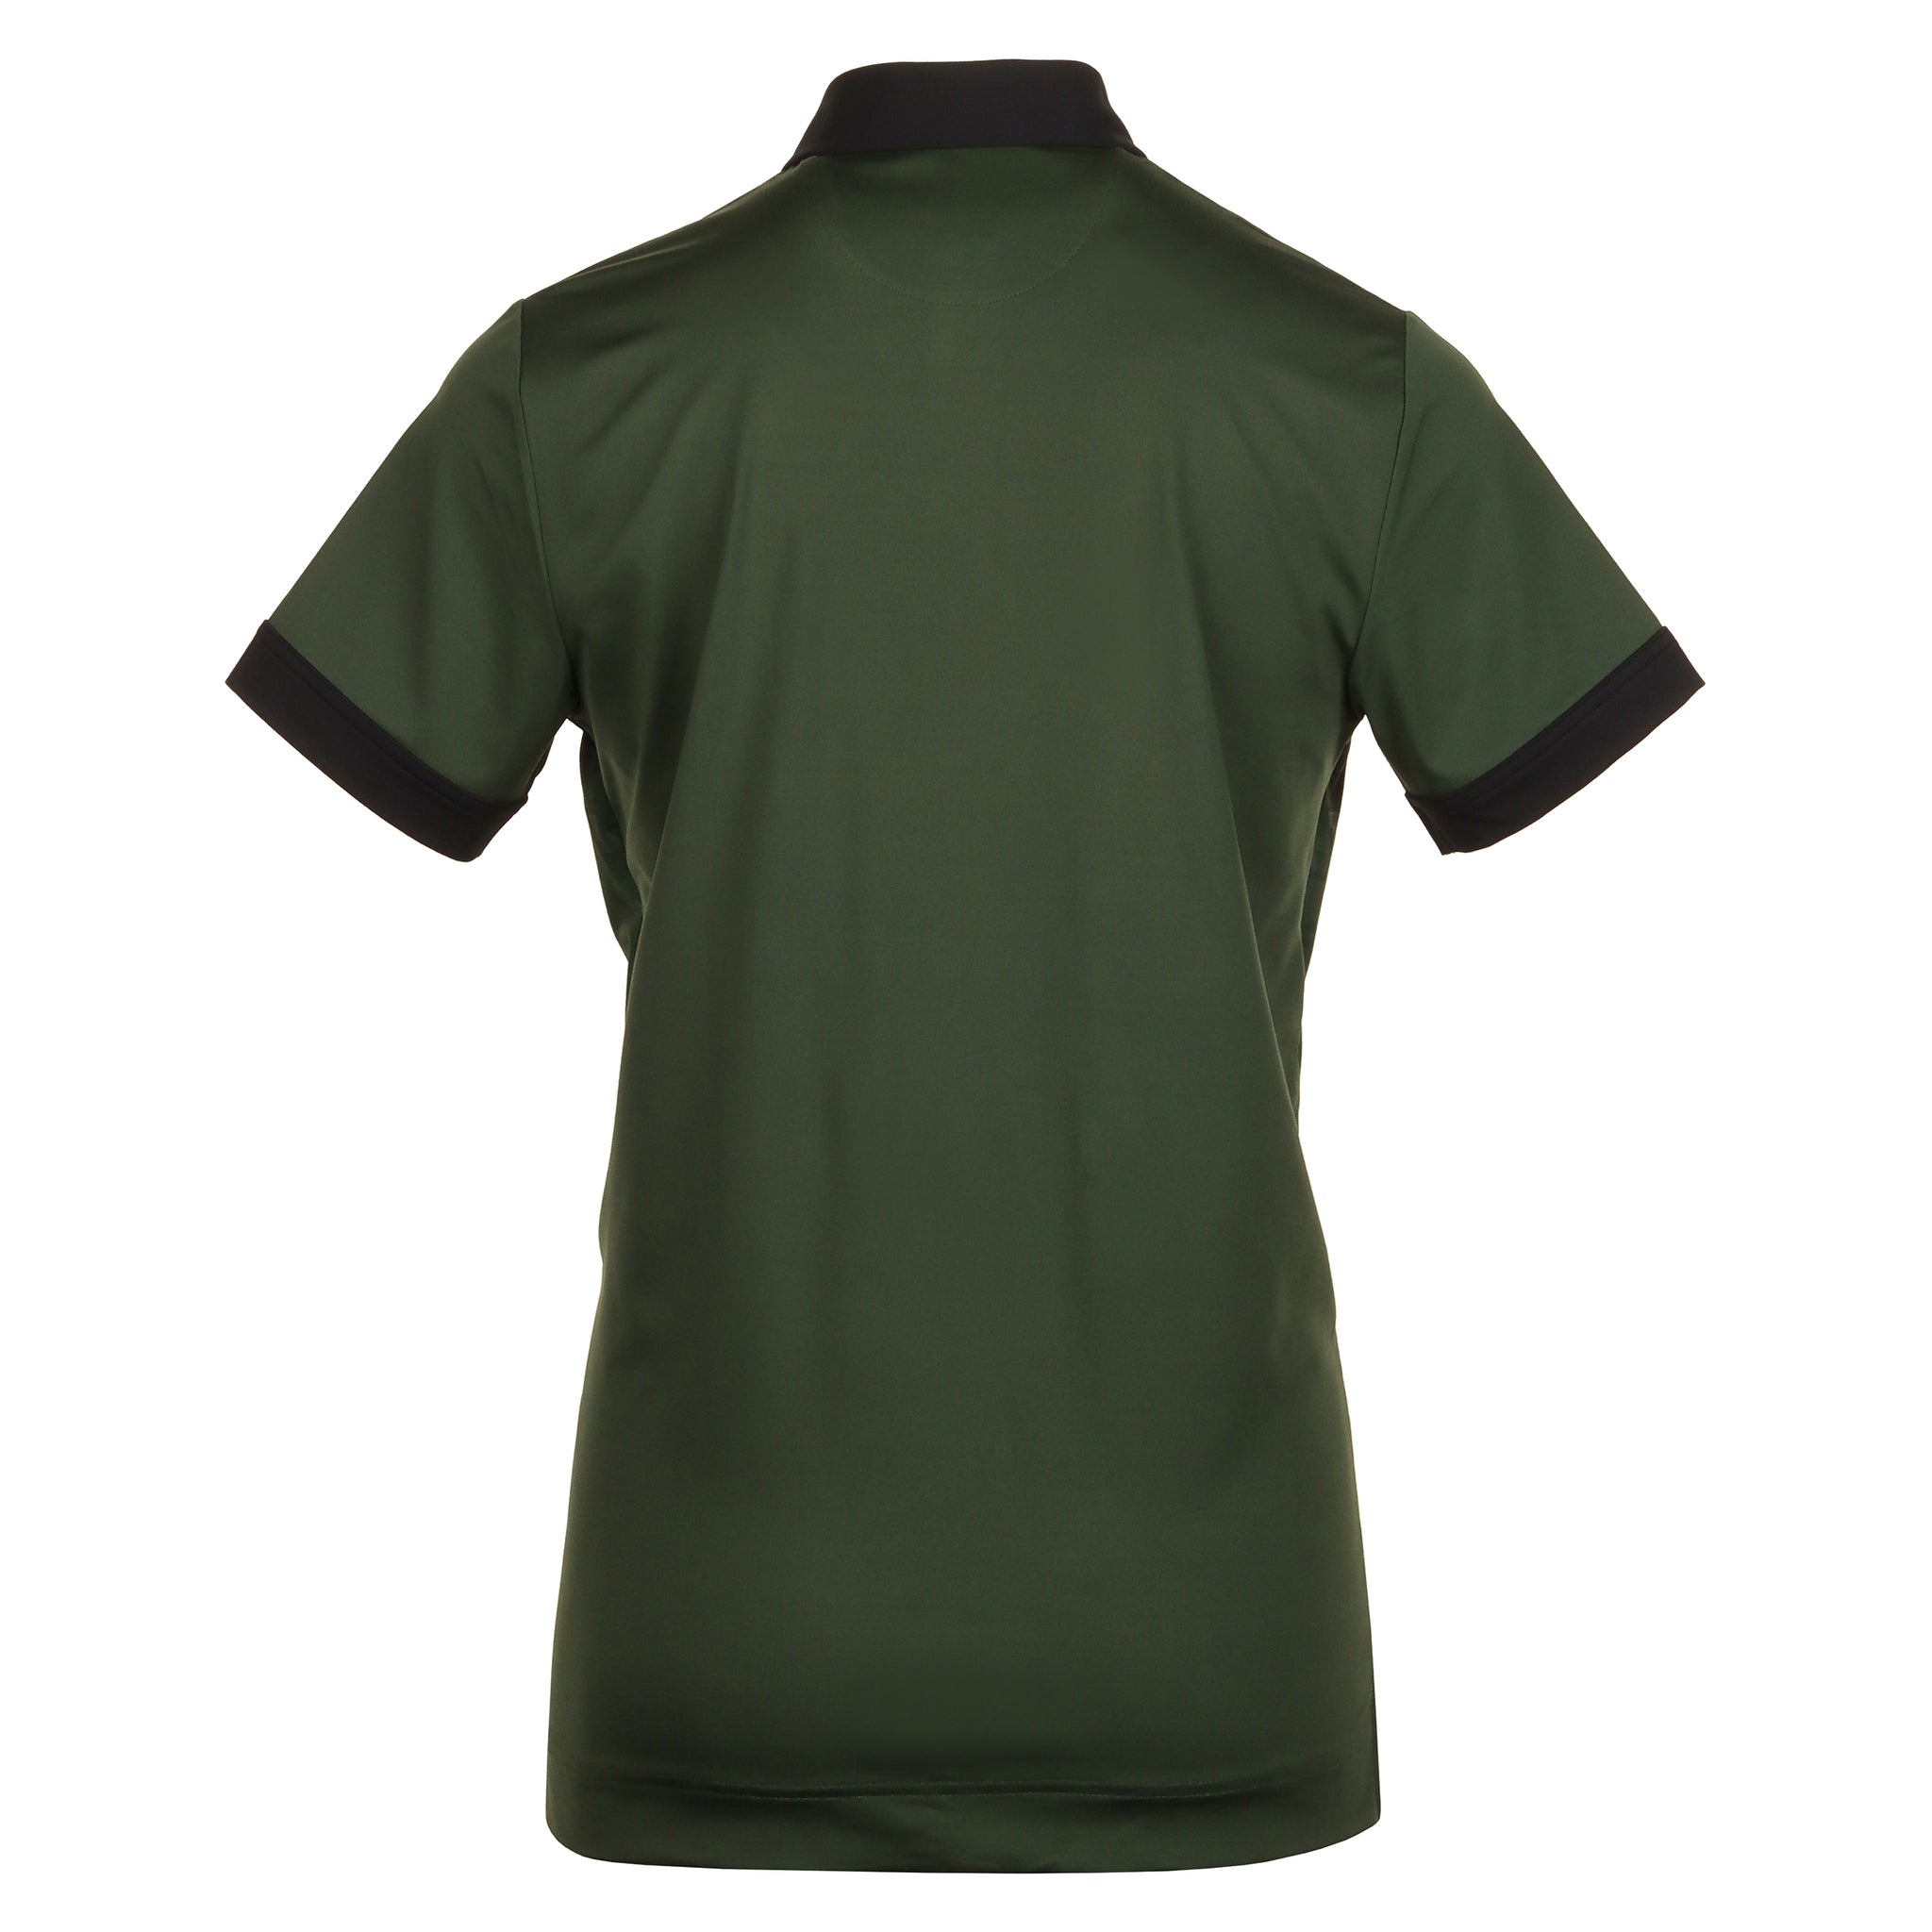 Callaway Golf X-Series Ombre Motion Chev Shirt